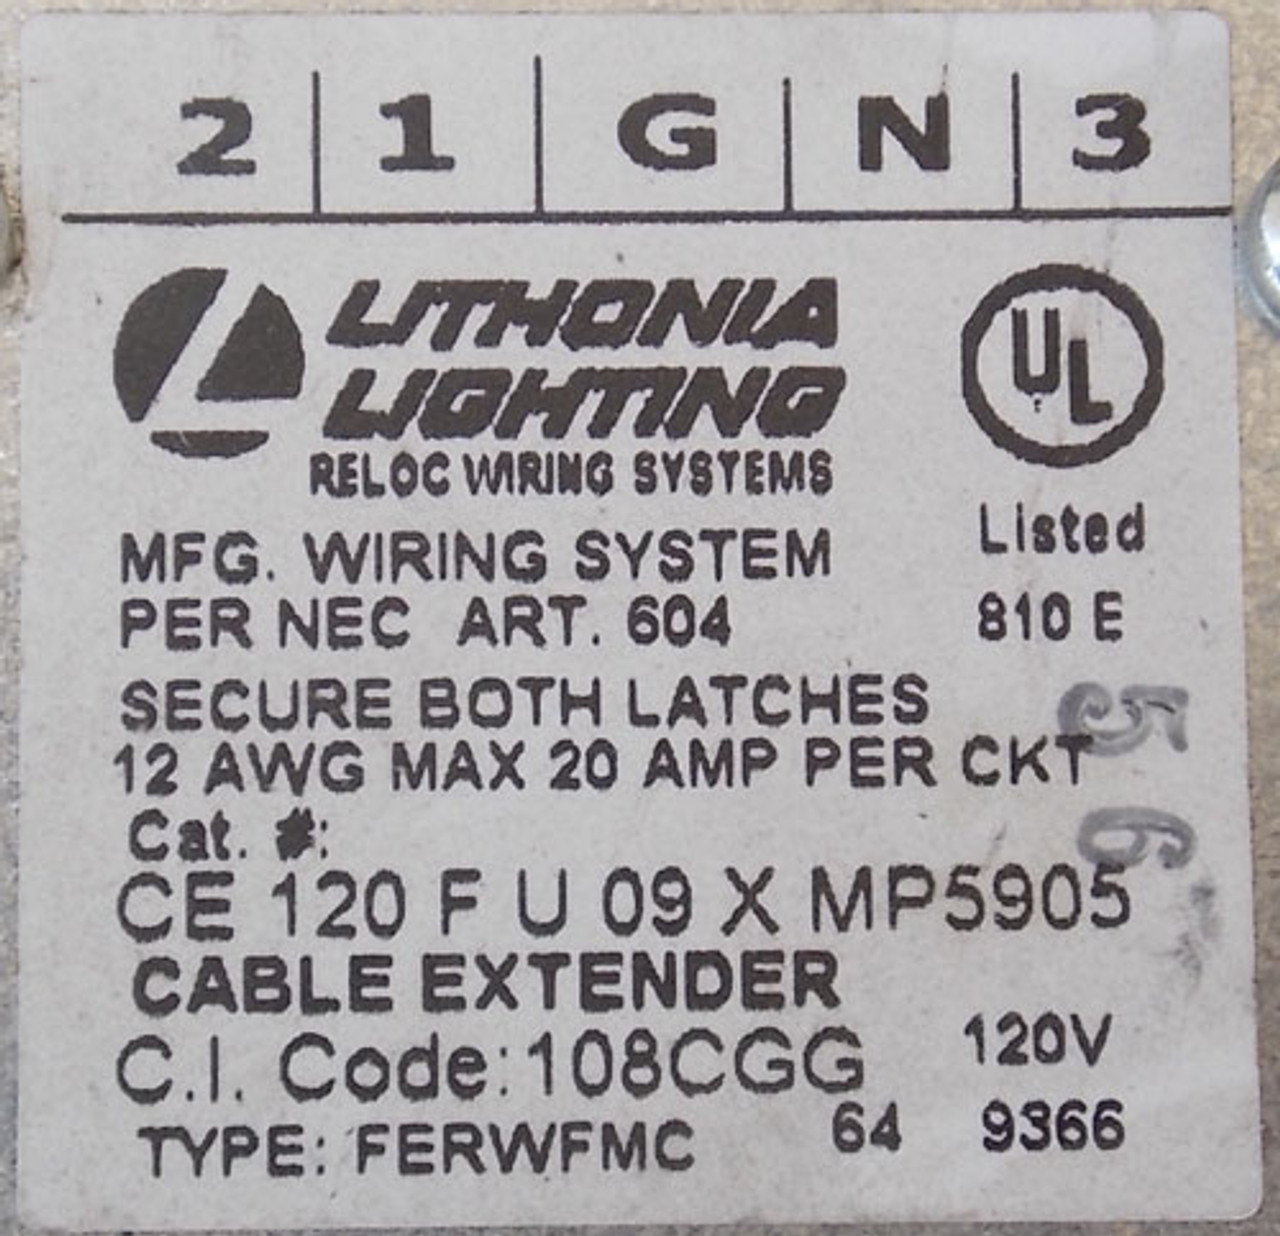 Lithonia Lighting CE 120 F U 09 X MP5905 9' Cable Extender 120V - New No Box